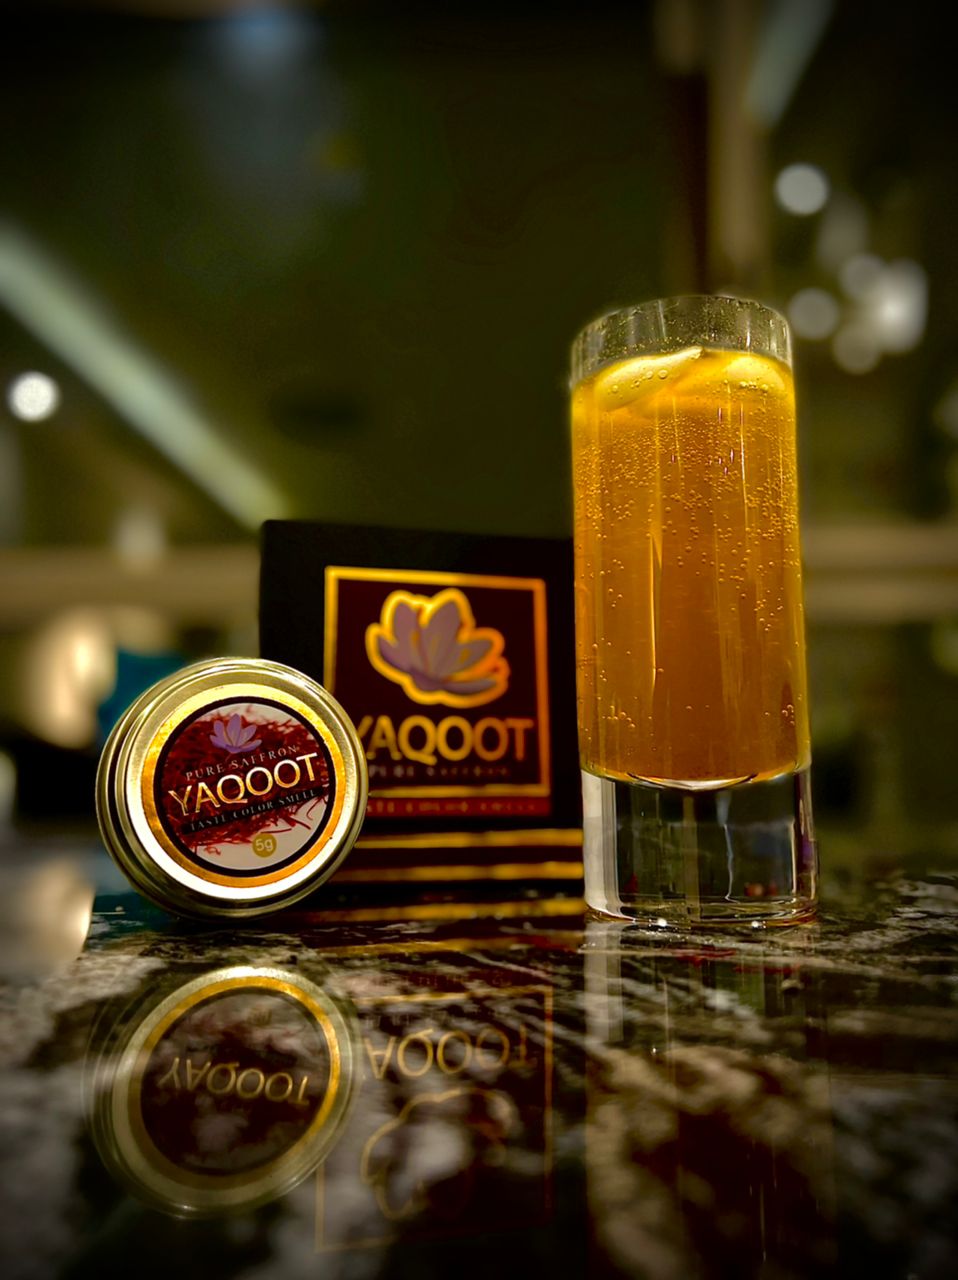 Yaqoot sumac and saffron refresher